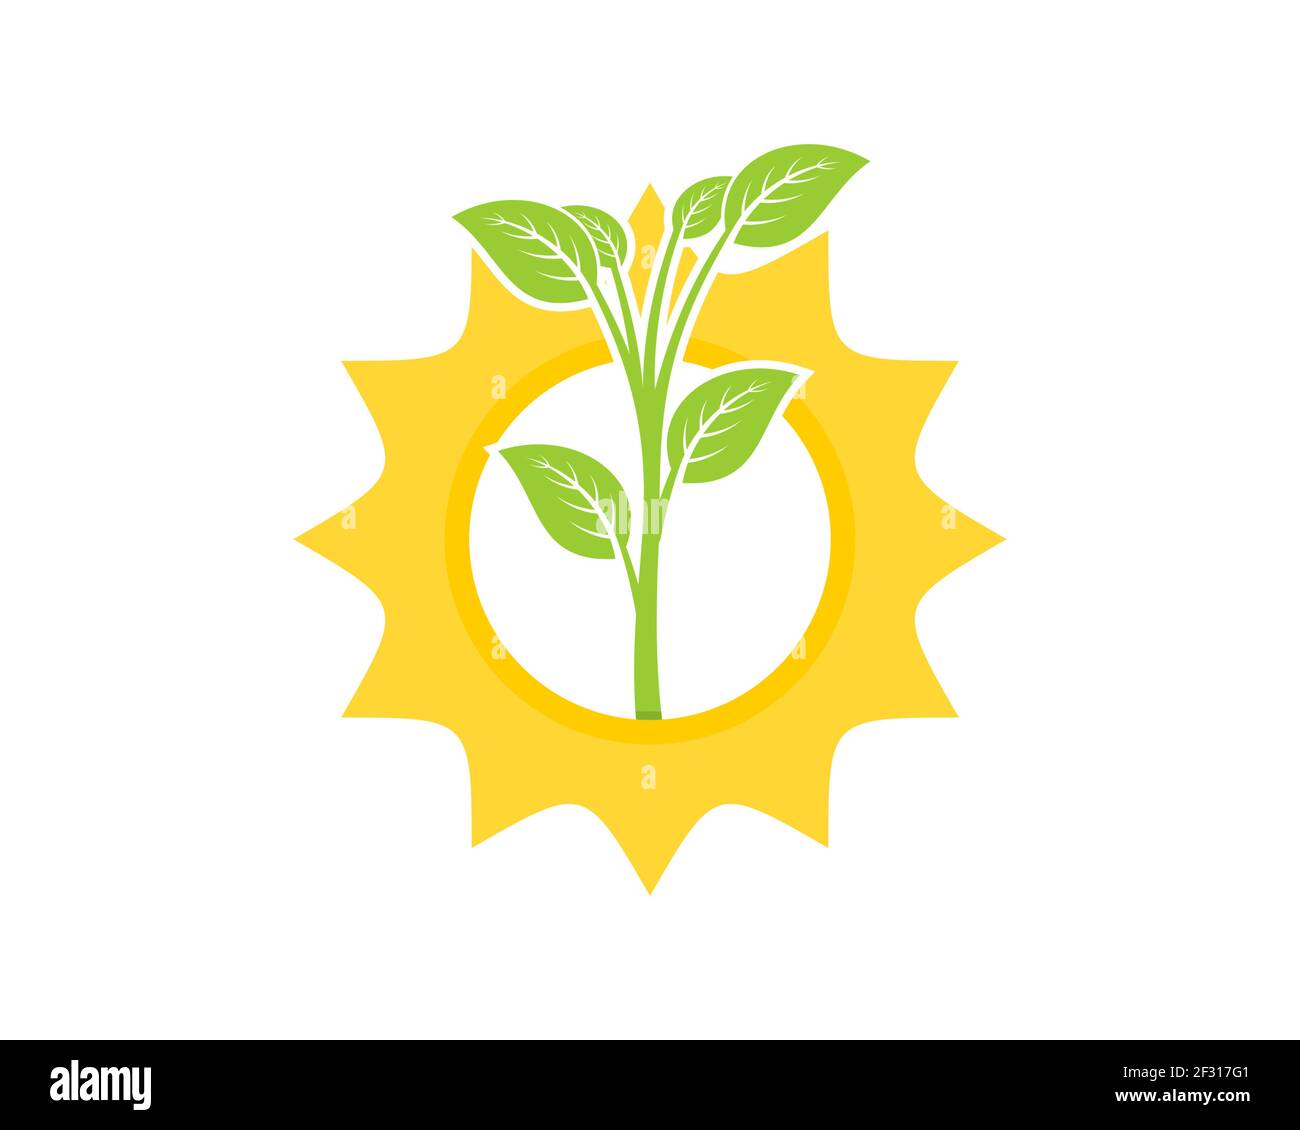 Planting tree in the sunrise logo Stock Photo